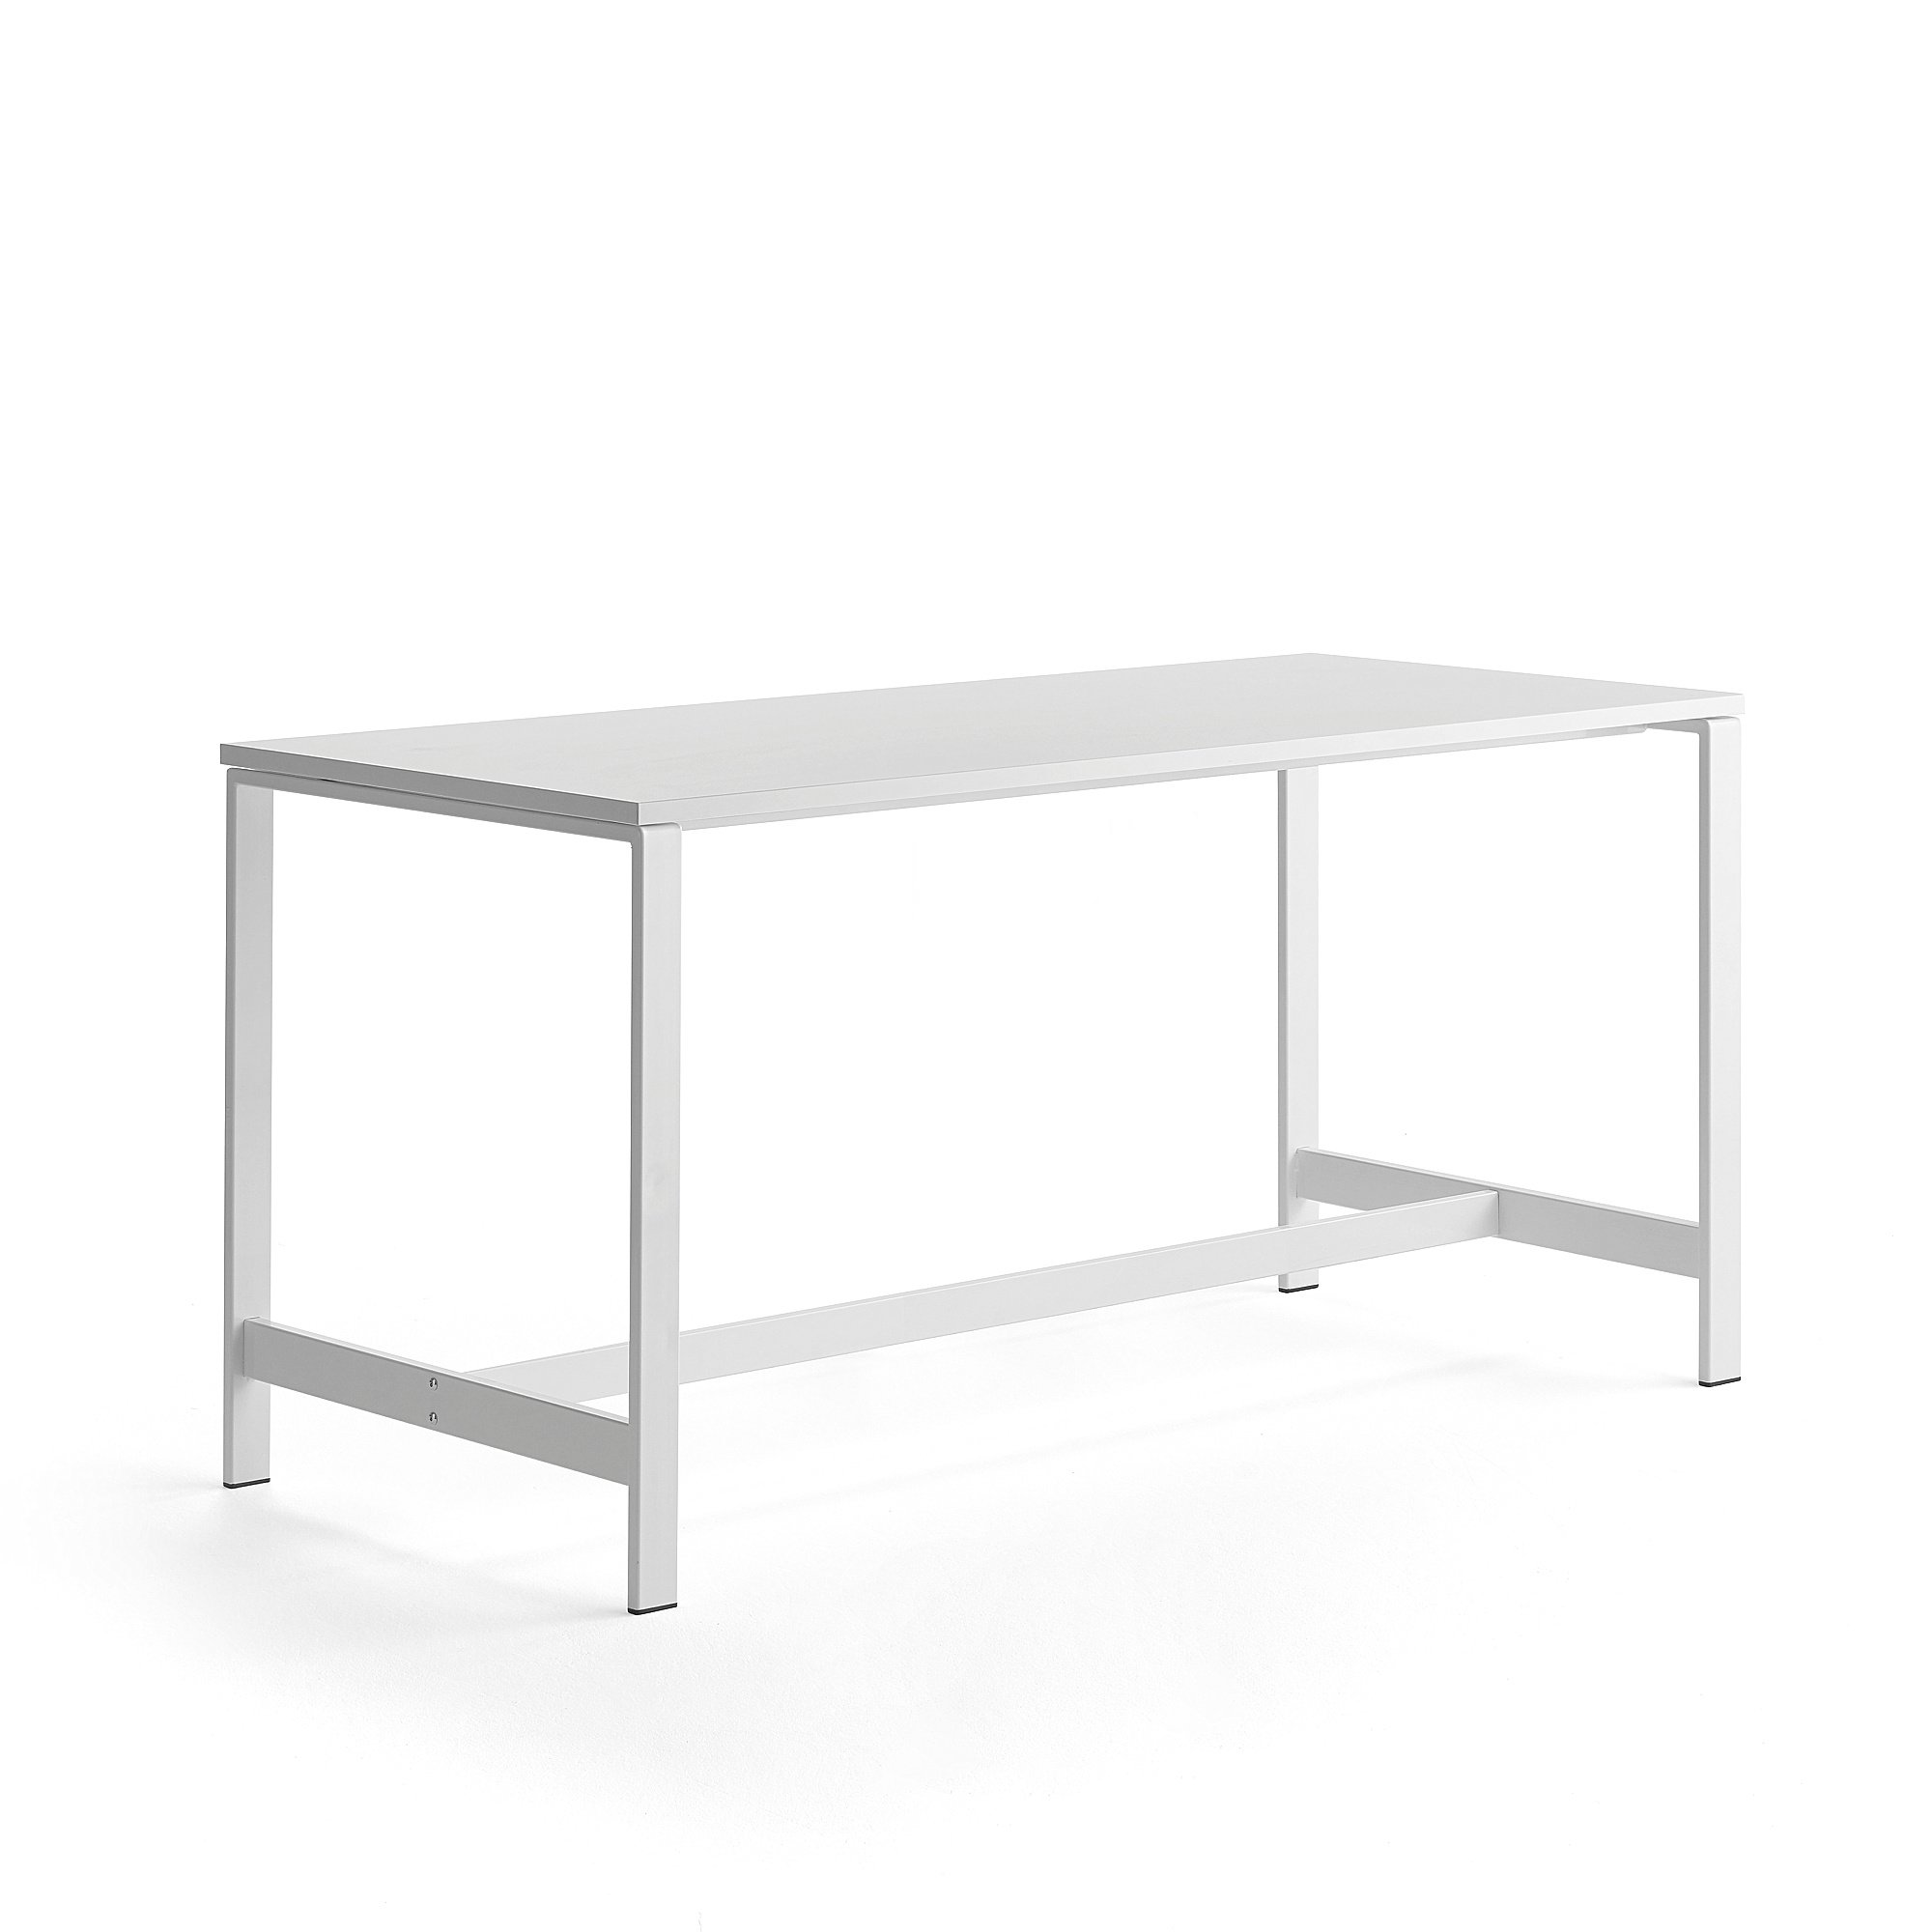 Stôl VARIOUS, 1800x800x900 mm, biela, biela